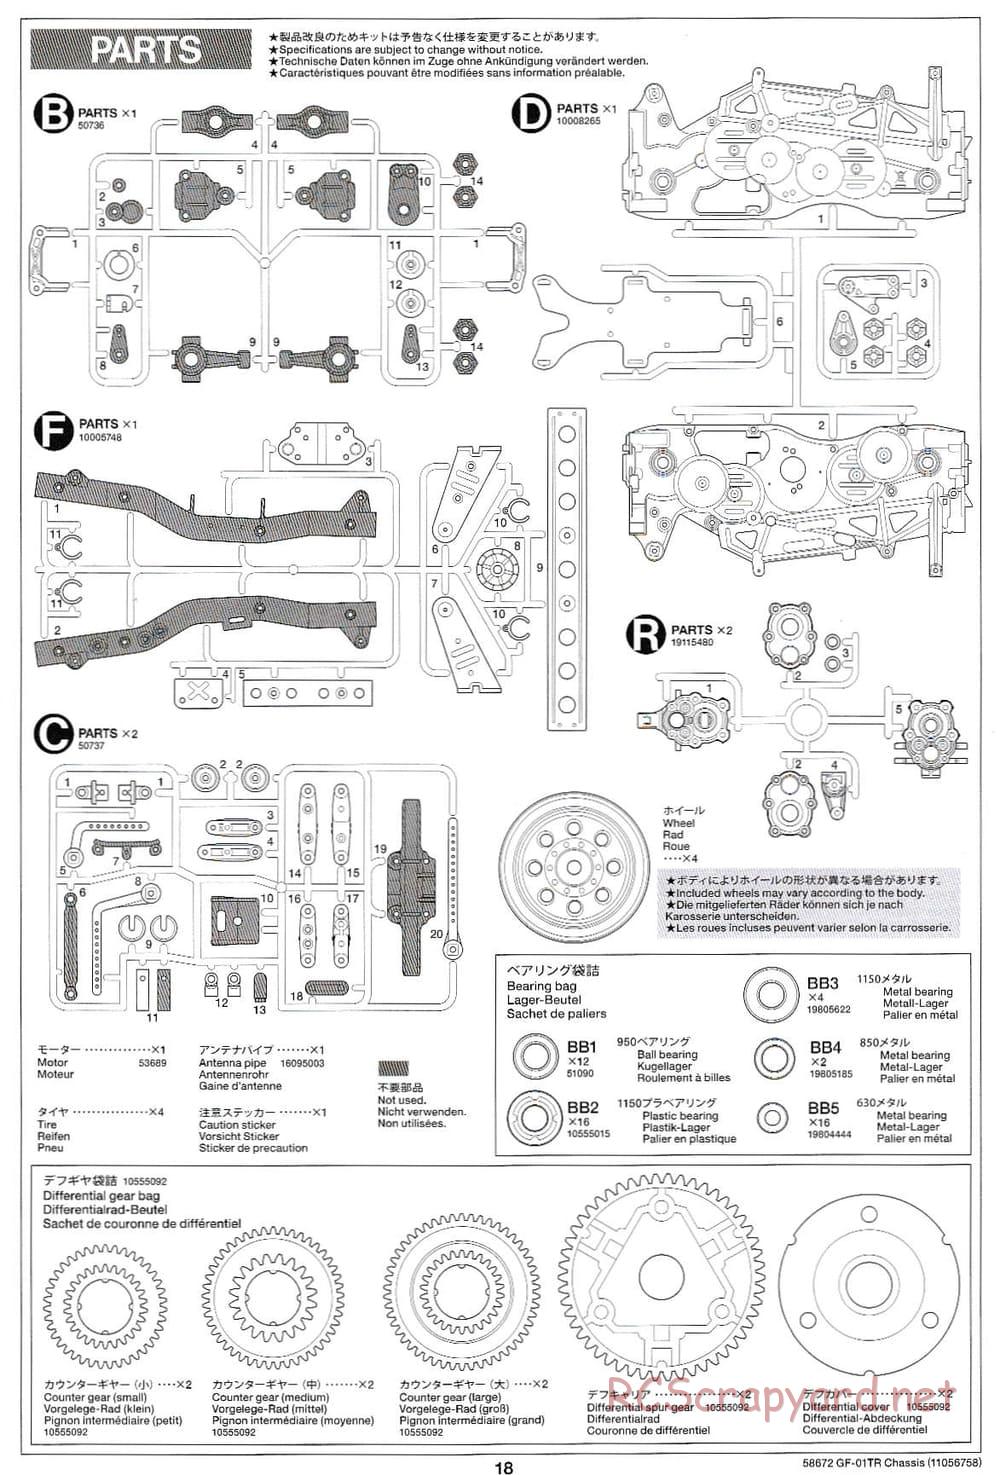 Tamiya - Monster Beetle Trail - GF-01TR Chassis - Manual - Page 18